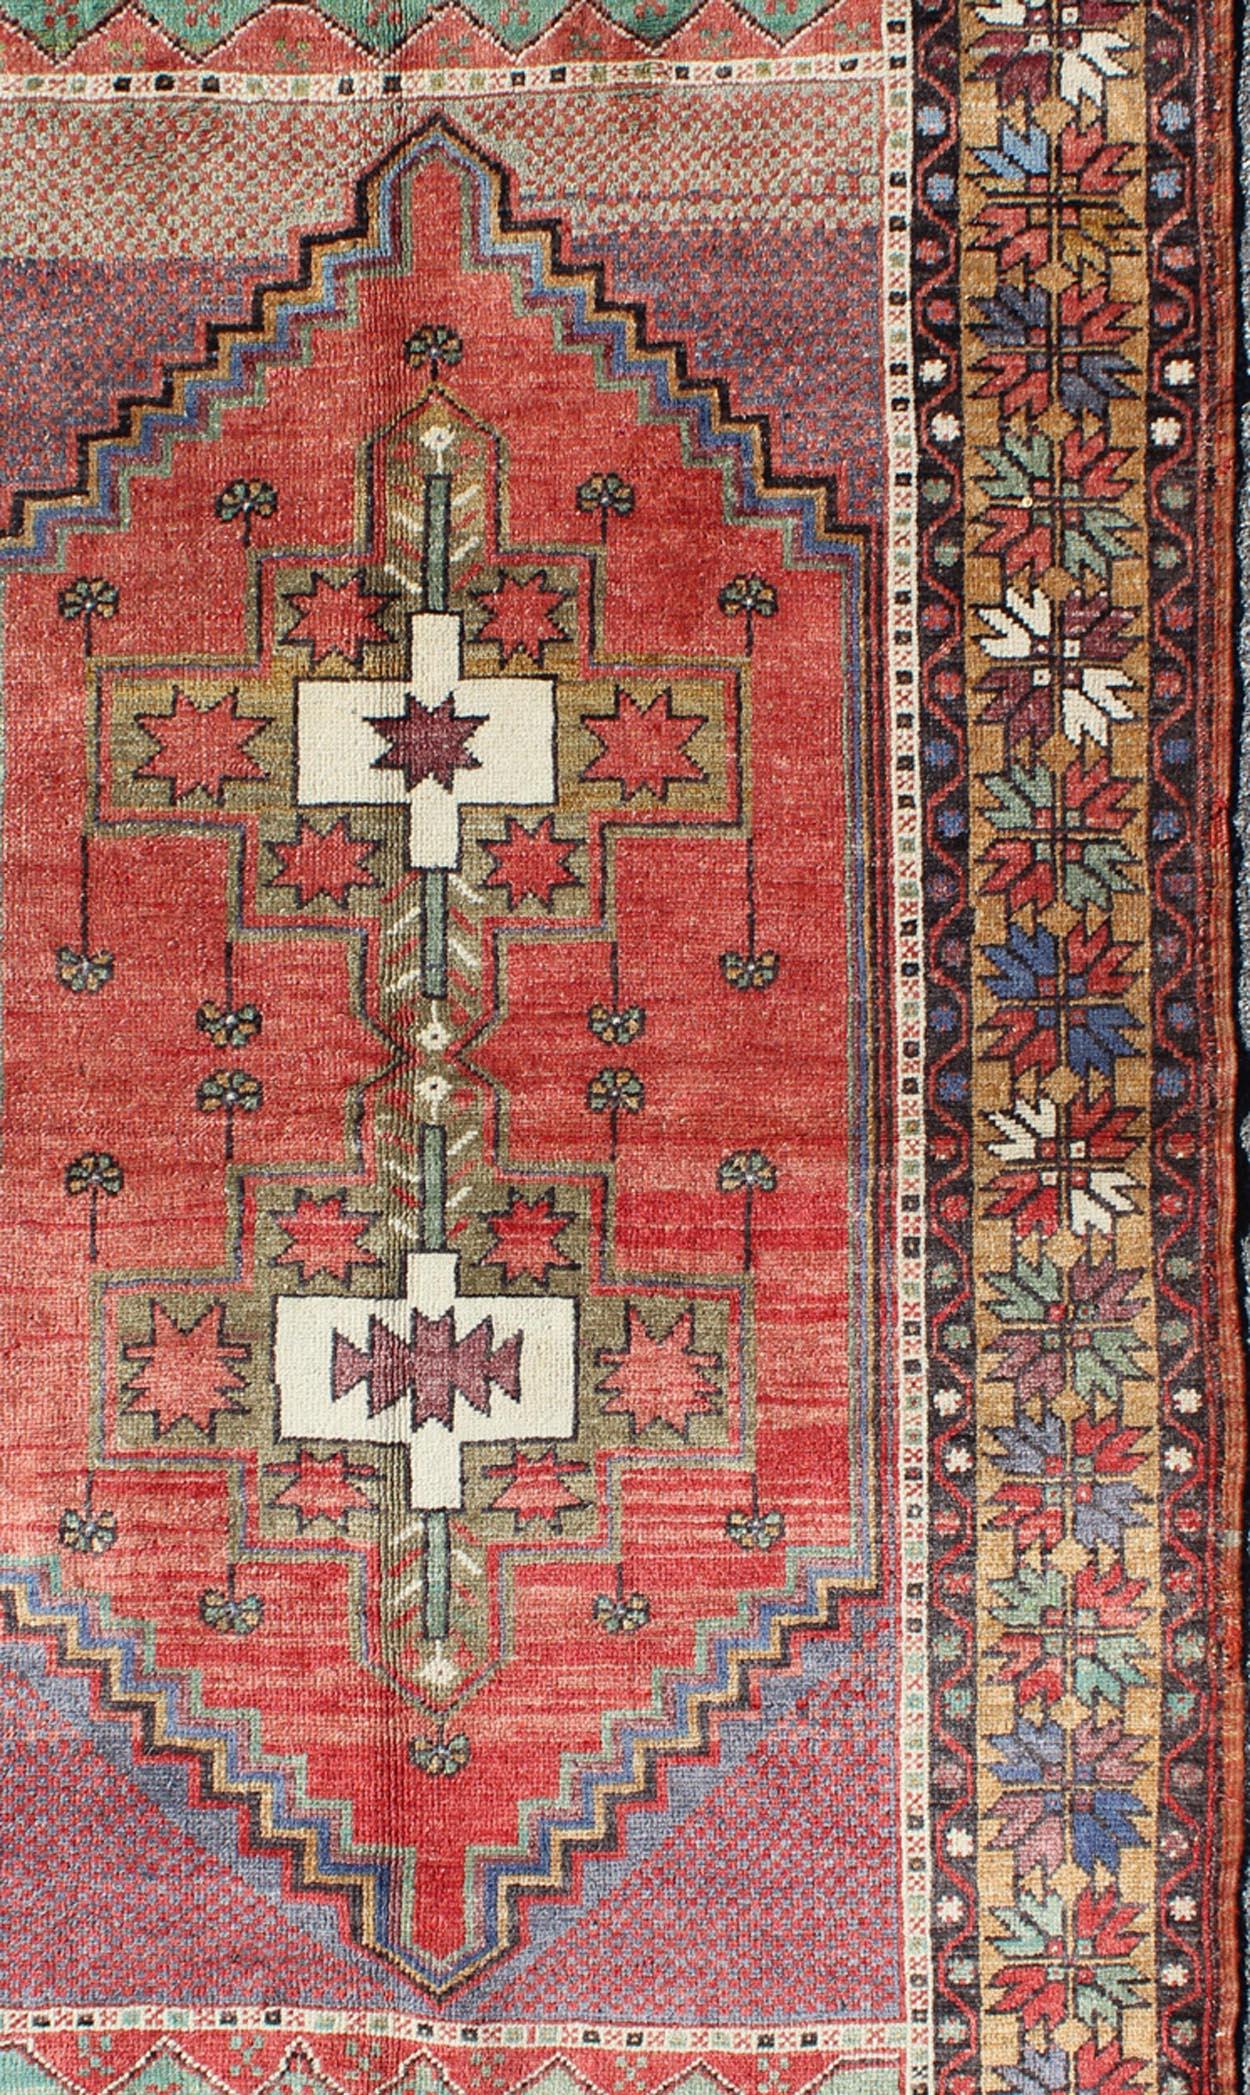 Tribal vintage Oushak rug with geometric medallion design, rug TU-TOZ-3353, country of origin / type: Turkey / Oushak, circa 1940

Measures: 3'11 x 6'10.